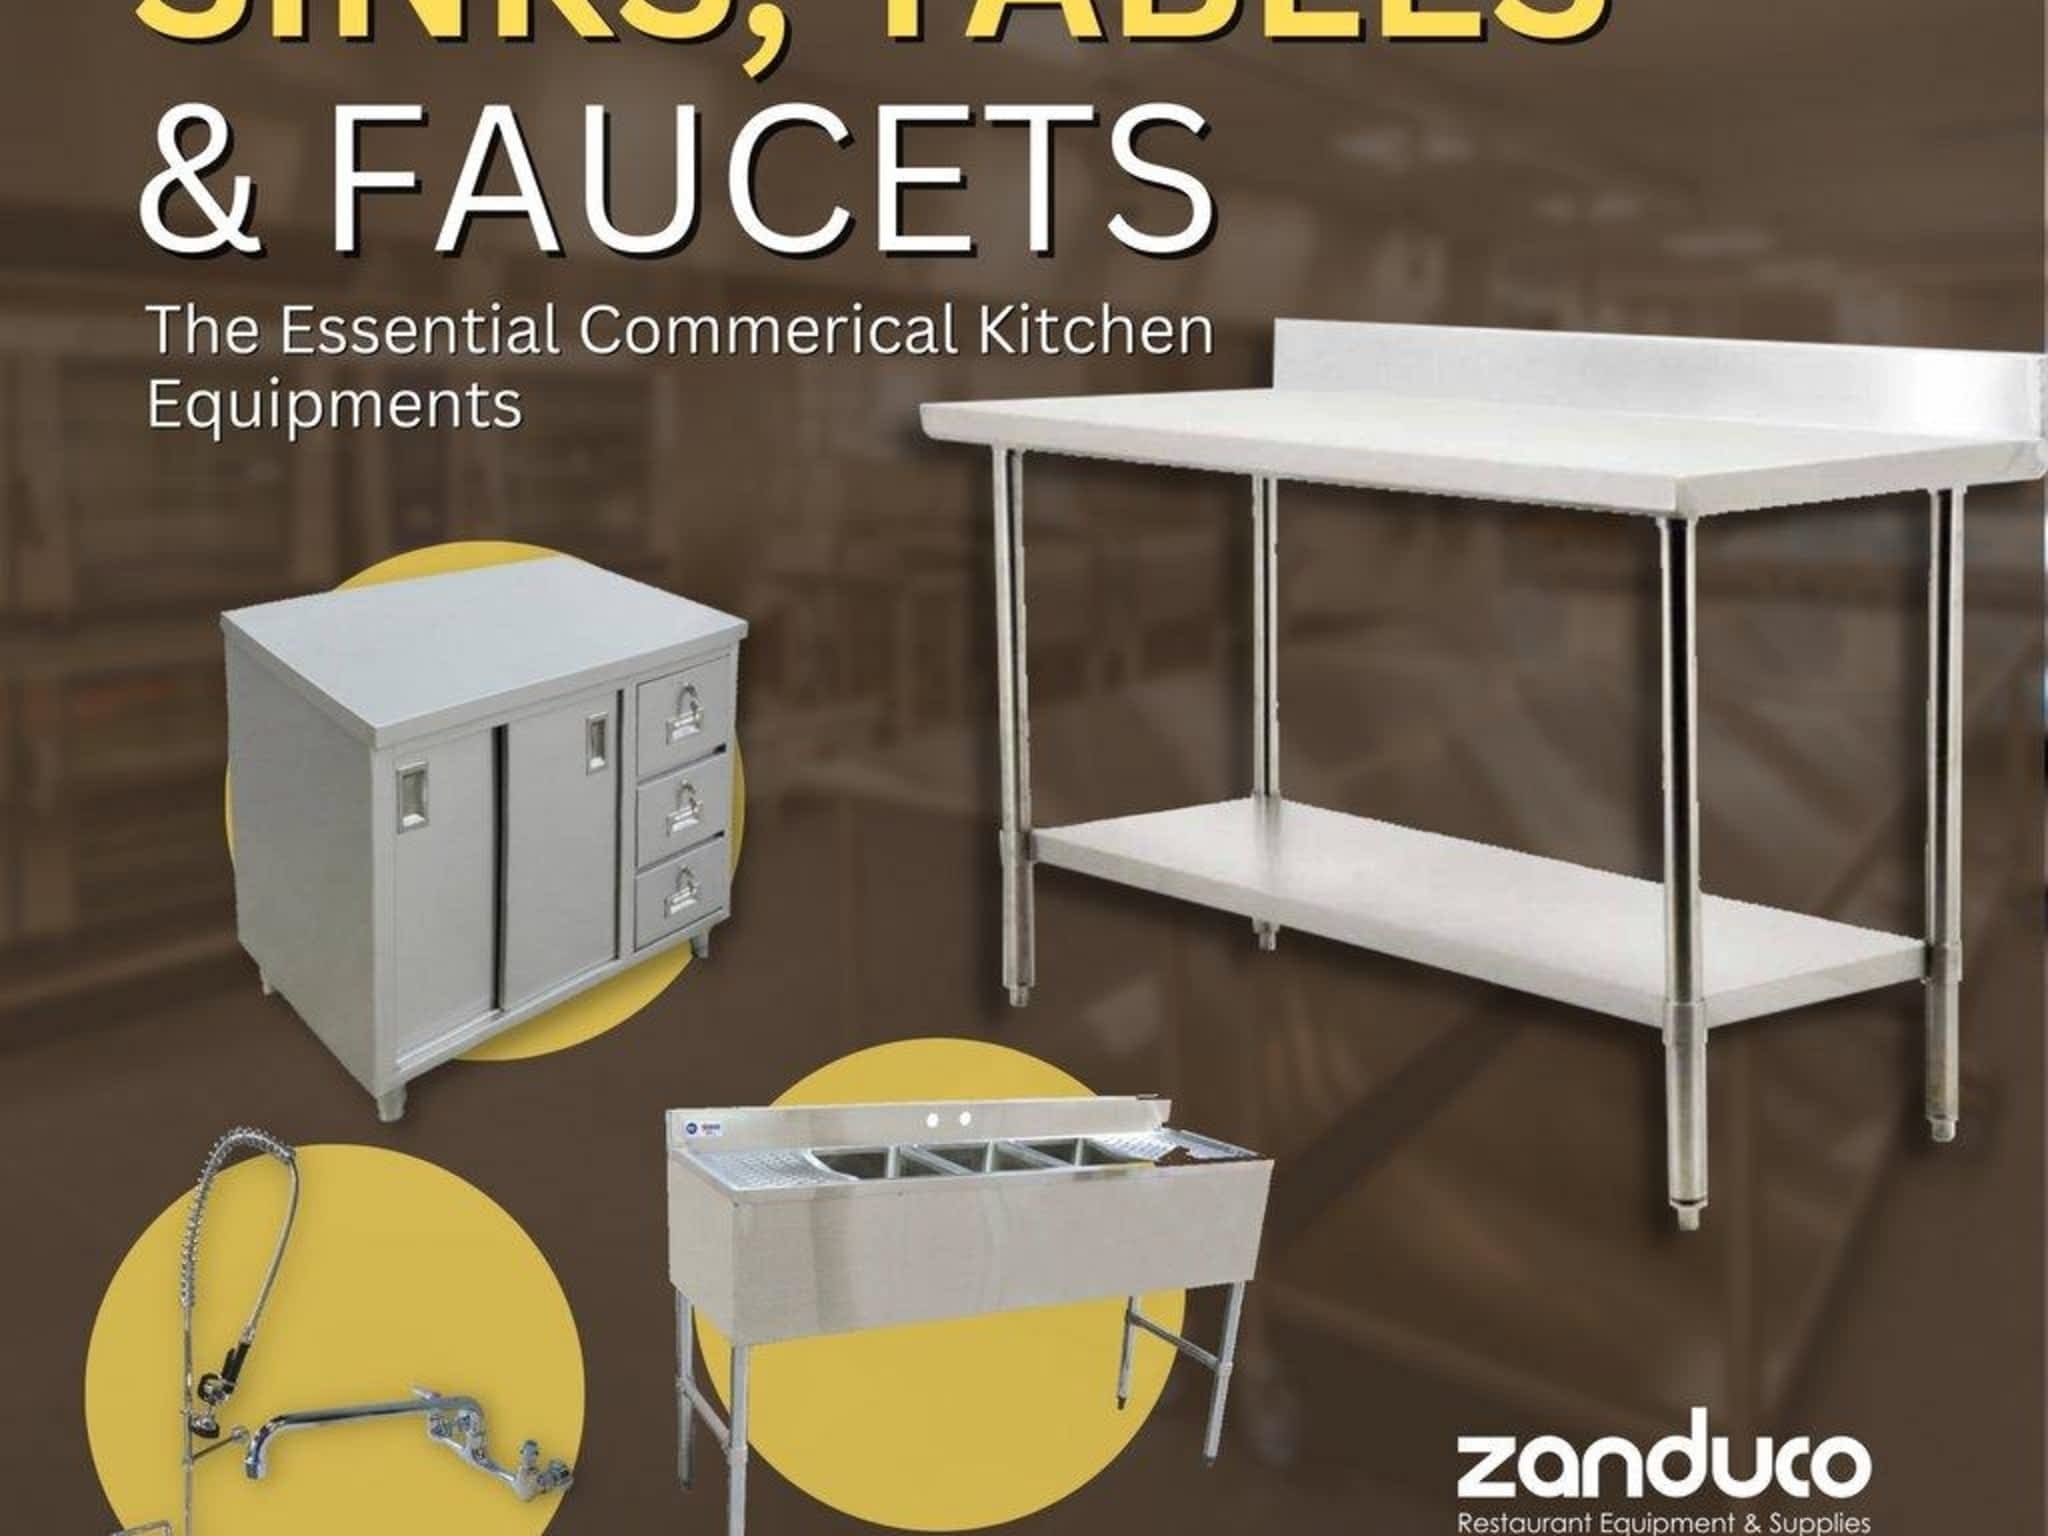 photo Zanduco Restaurant Equipment & Supplies